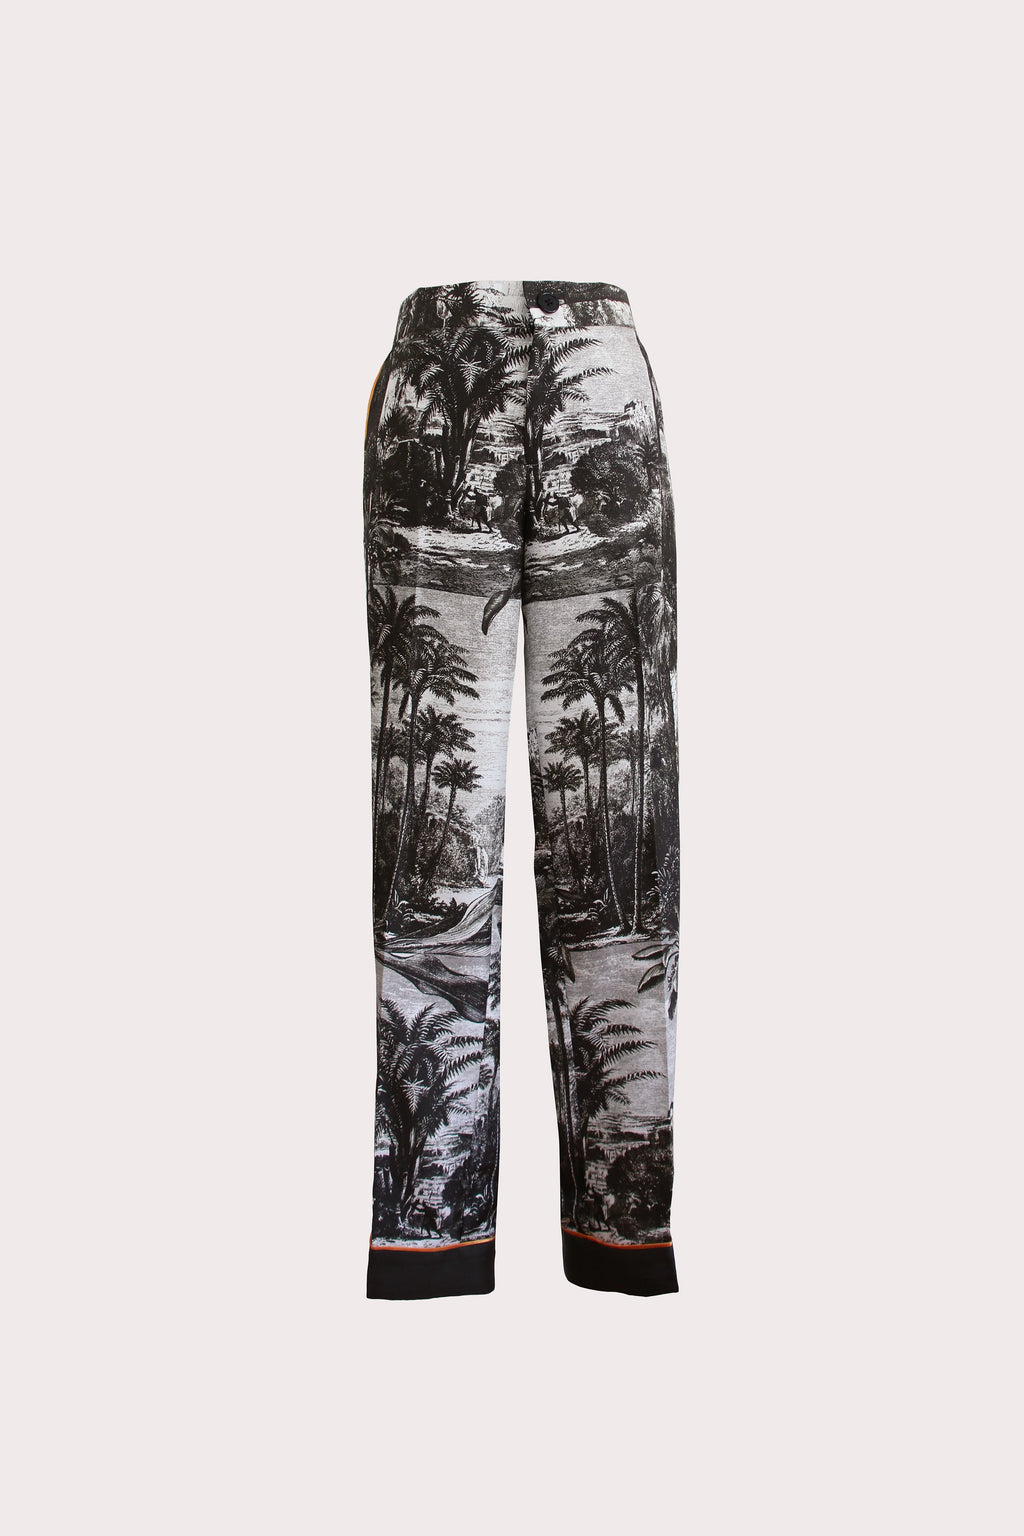 Katyusha Black&White Forest twill silk pants